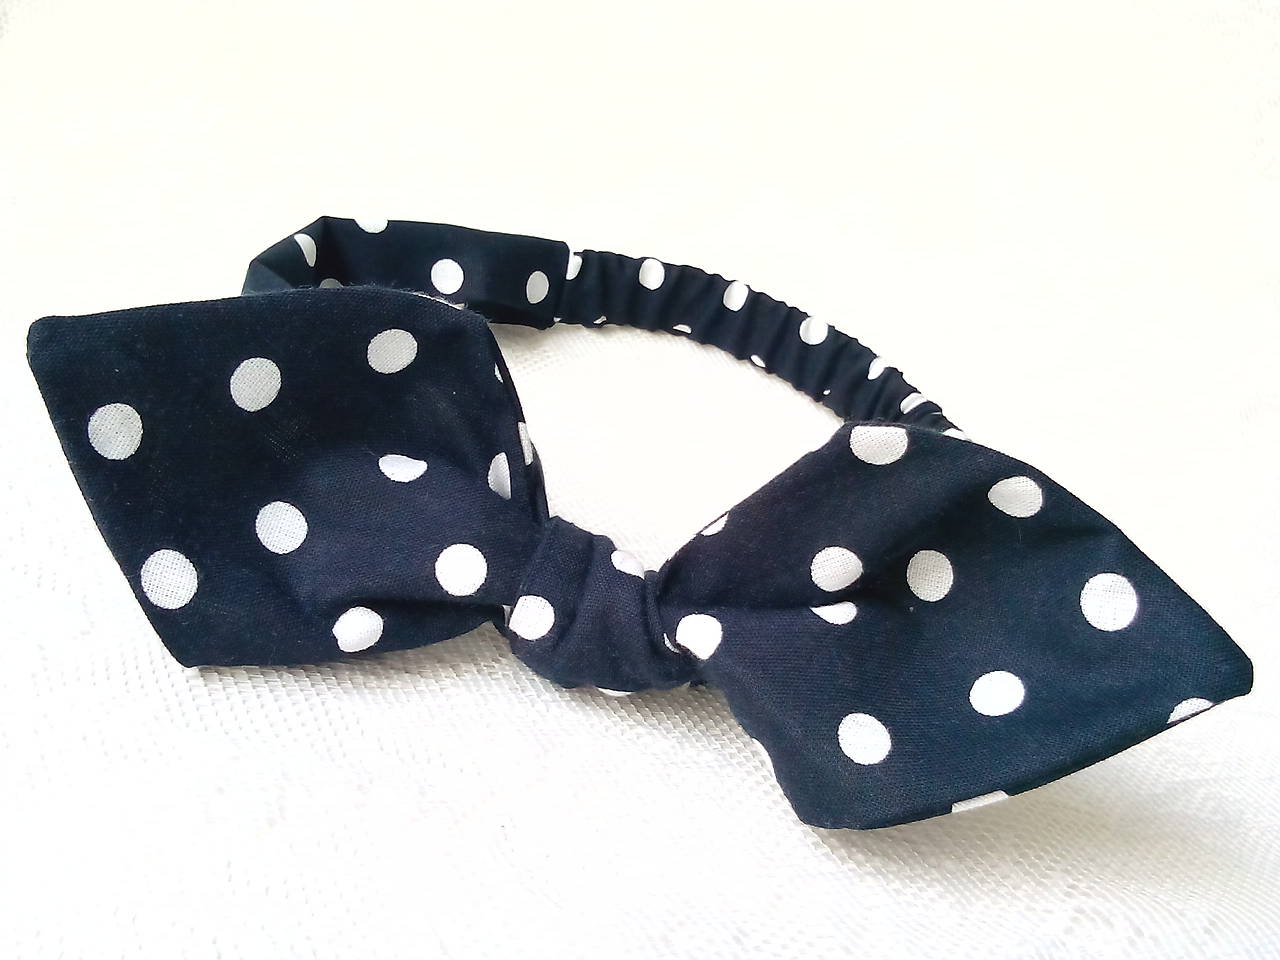 Pin Up headband on elastic (black with white polka dots)